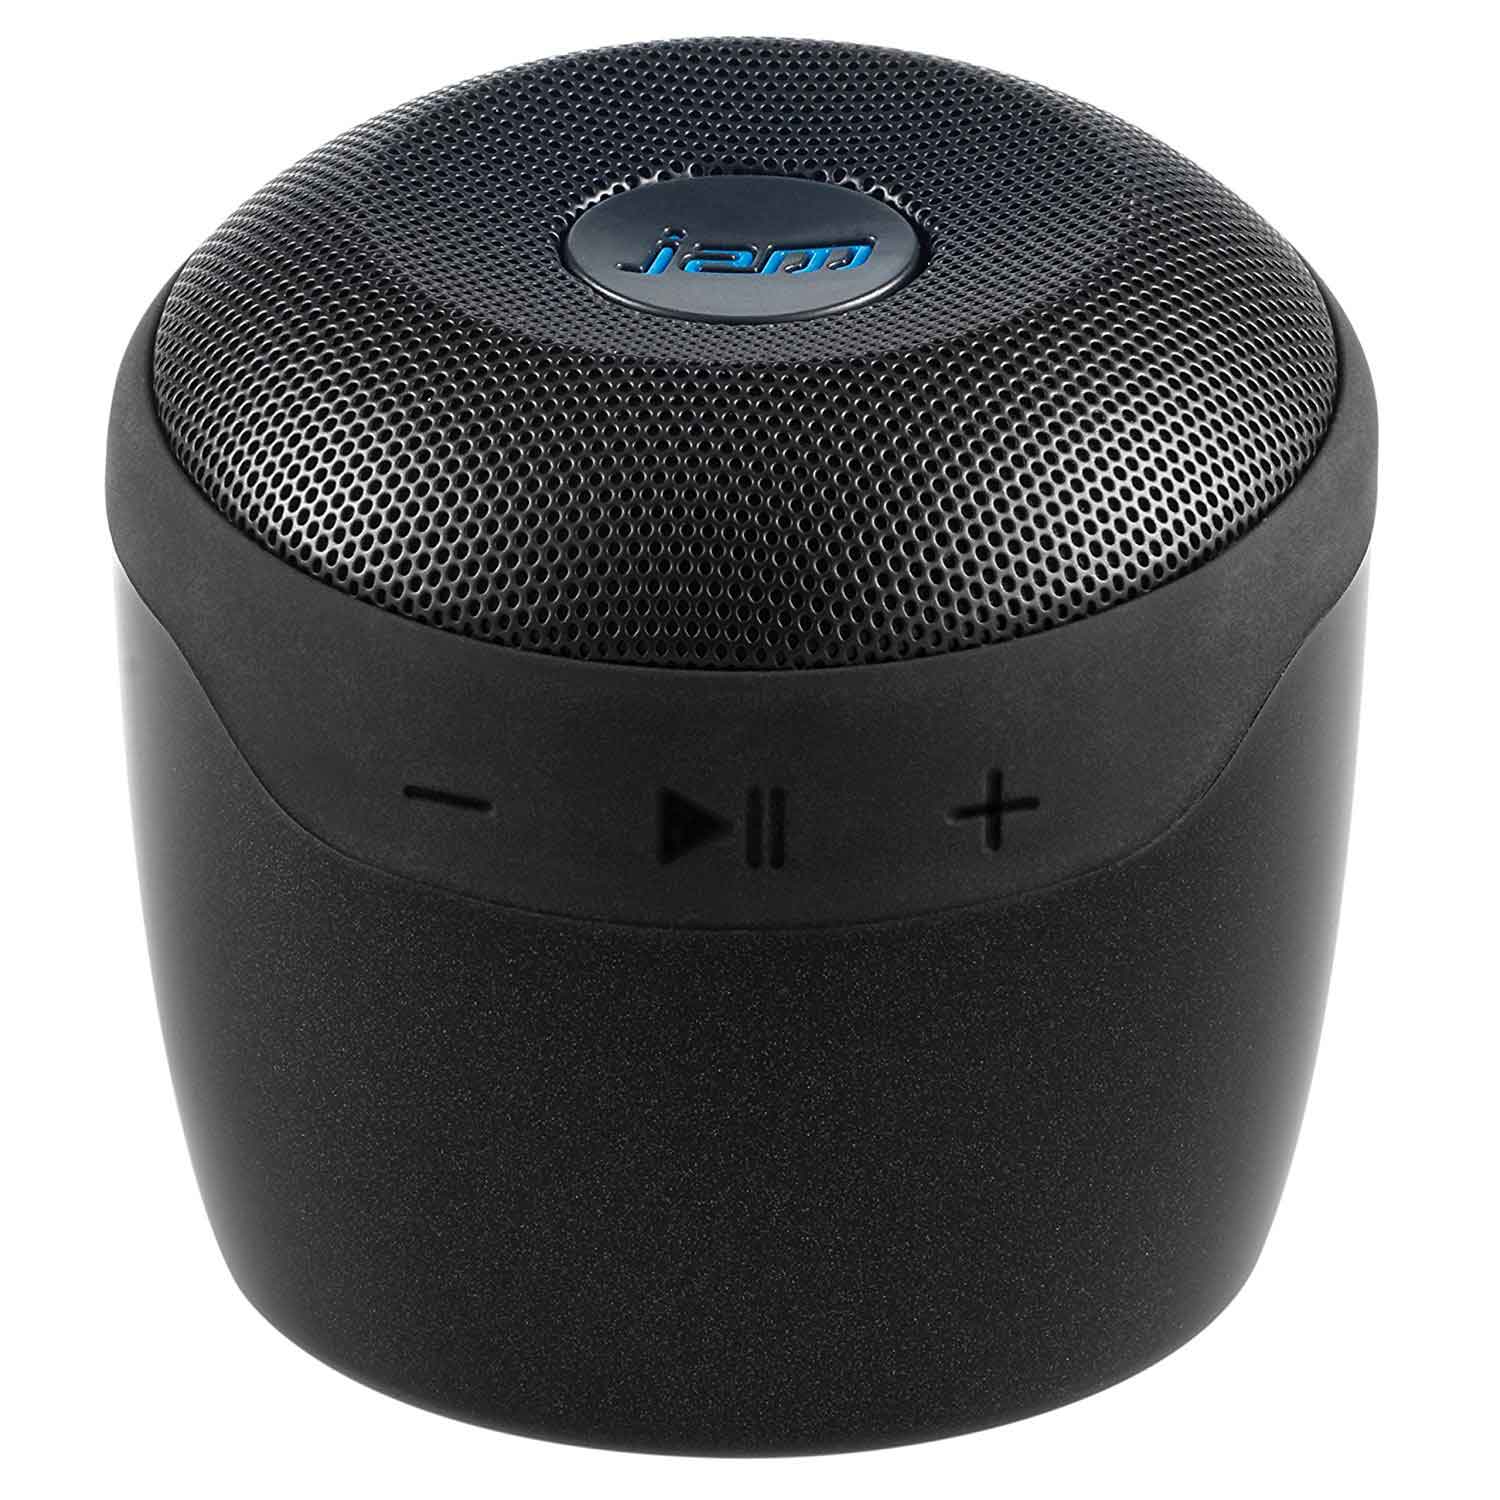 Jam Voice Smart Bluetooth Speaker with Alexa, WiFi, and Multiroom
